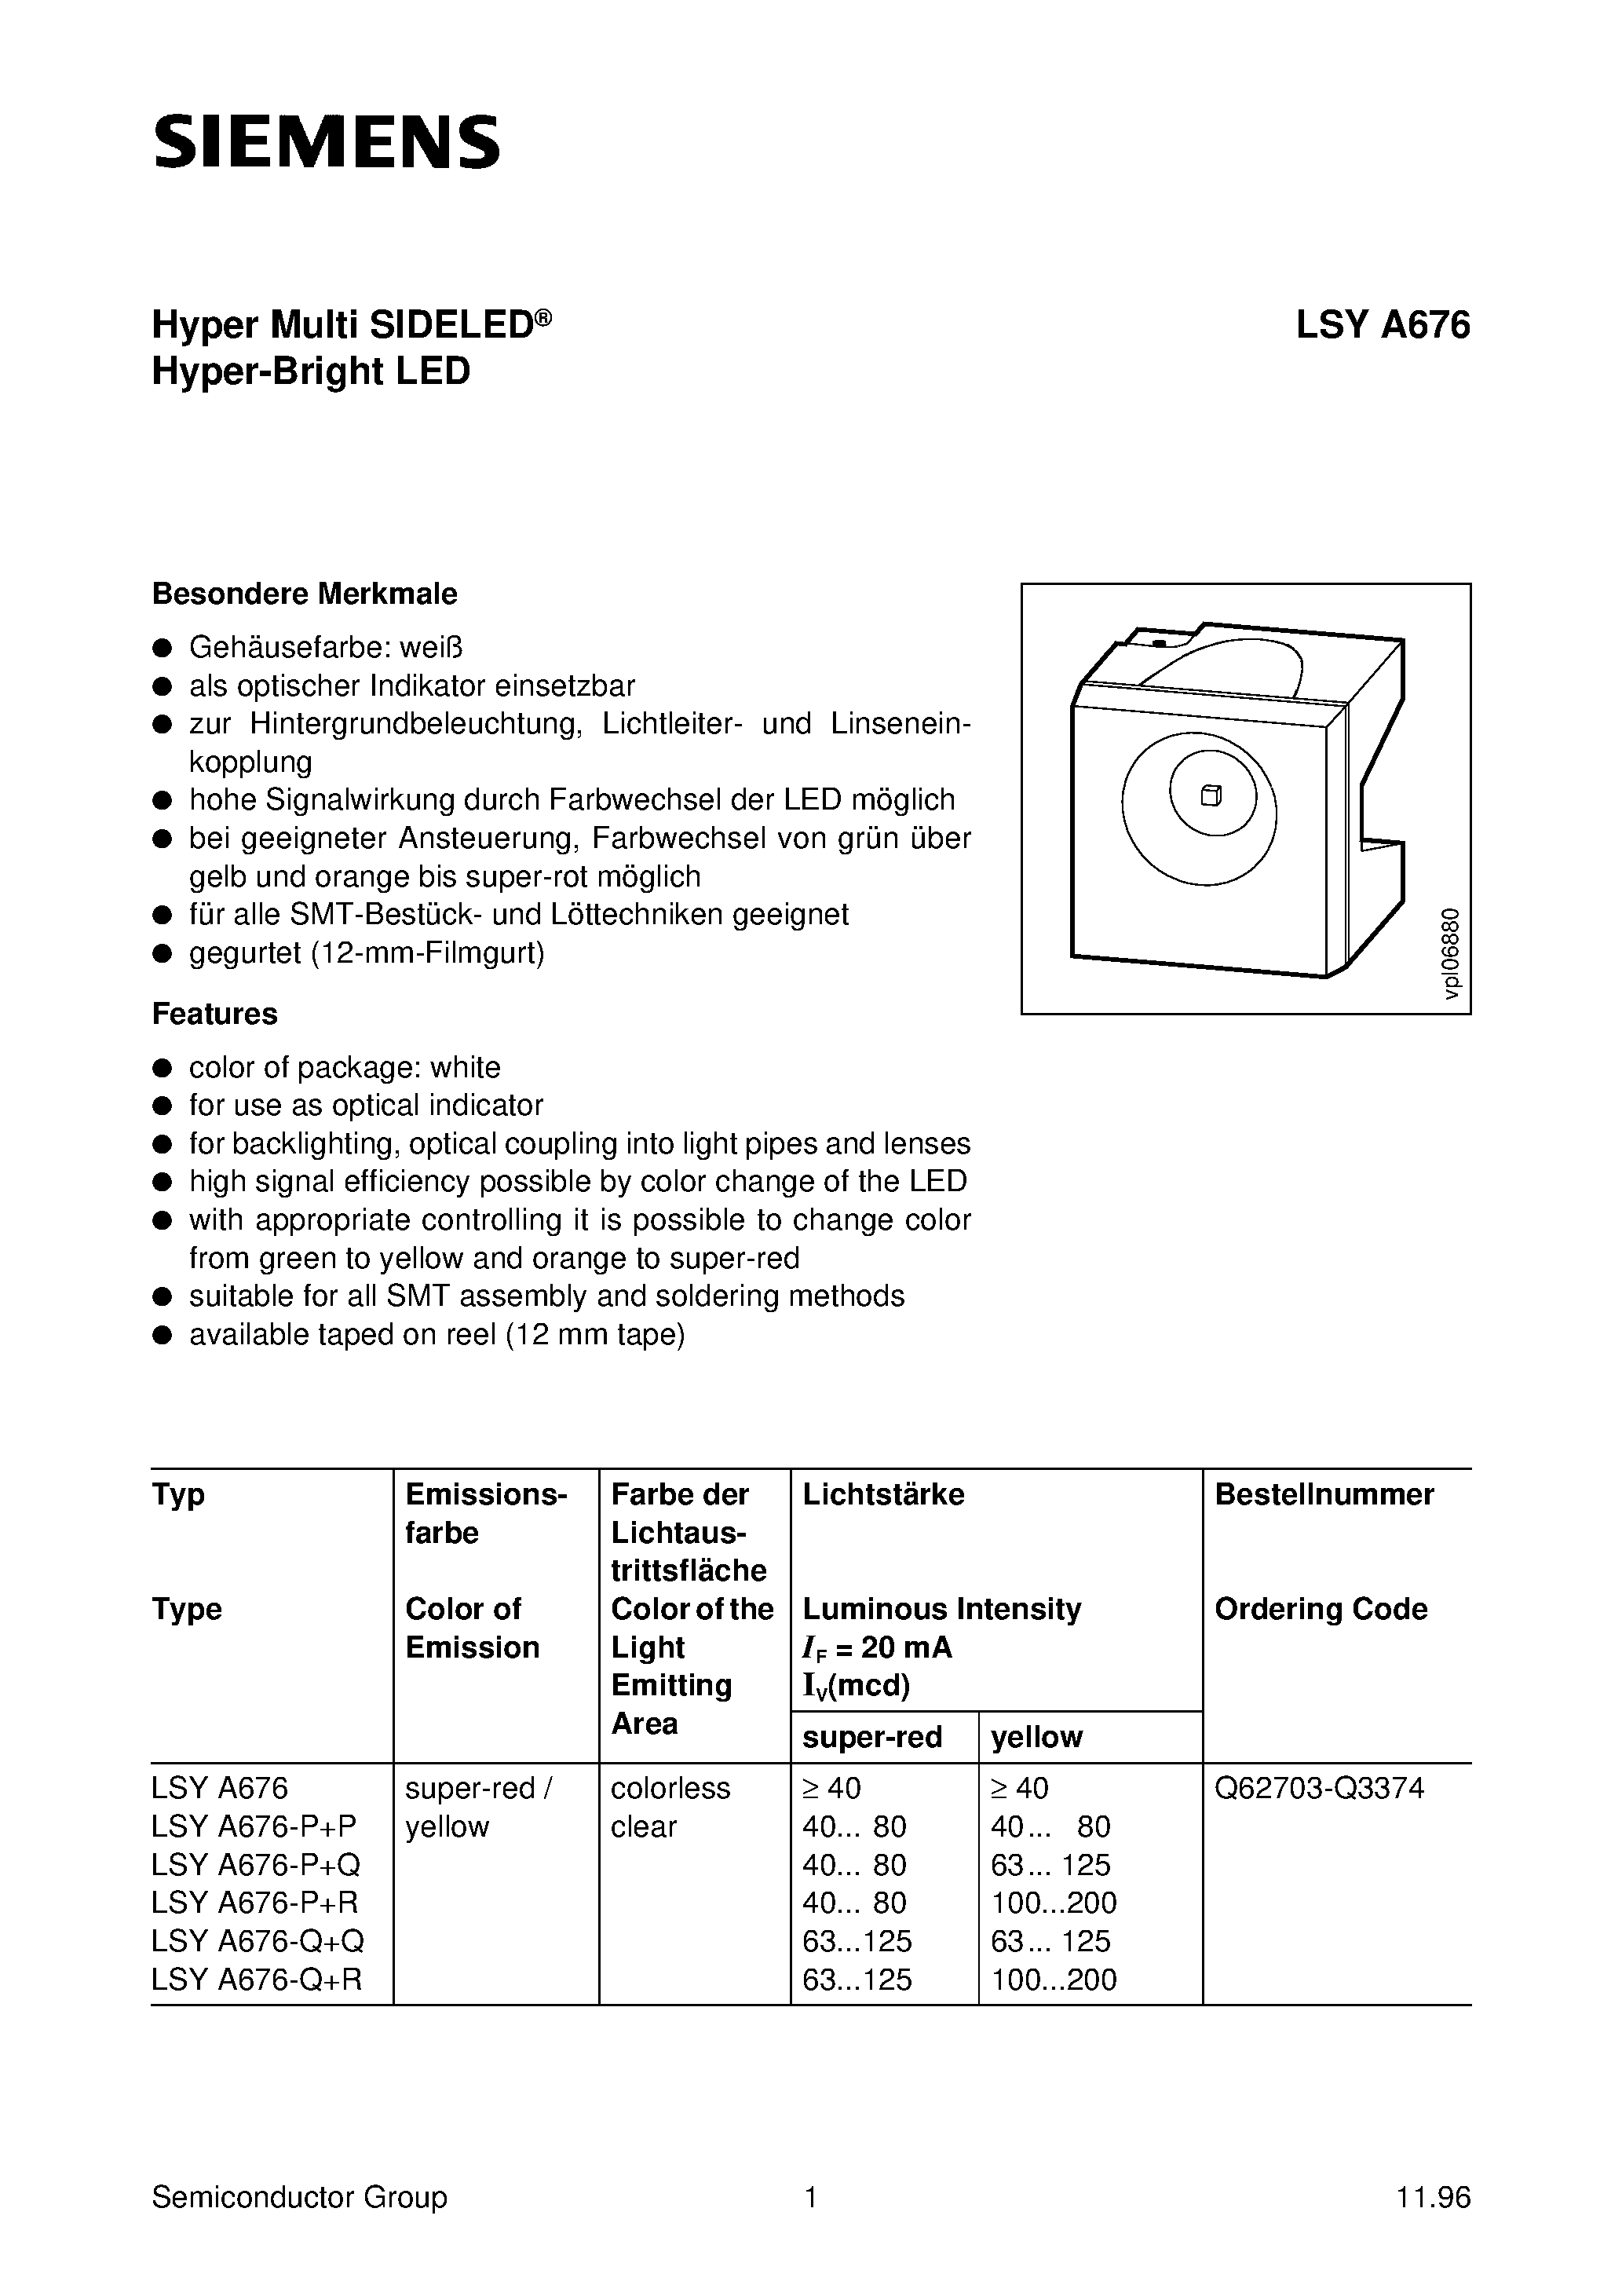 Datasheet LSYA676-P+Q - Hyper Multi SIDELED Hyper-Bright LED page 1